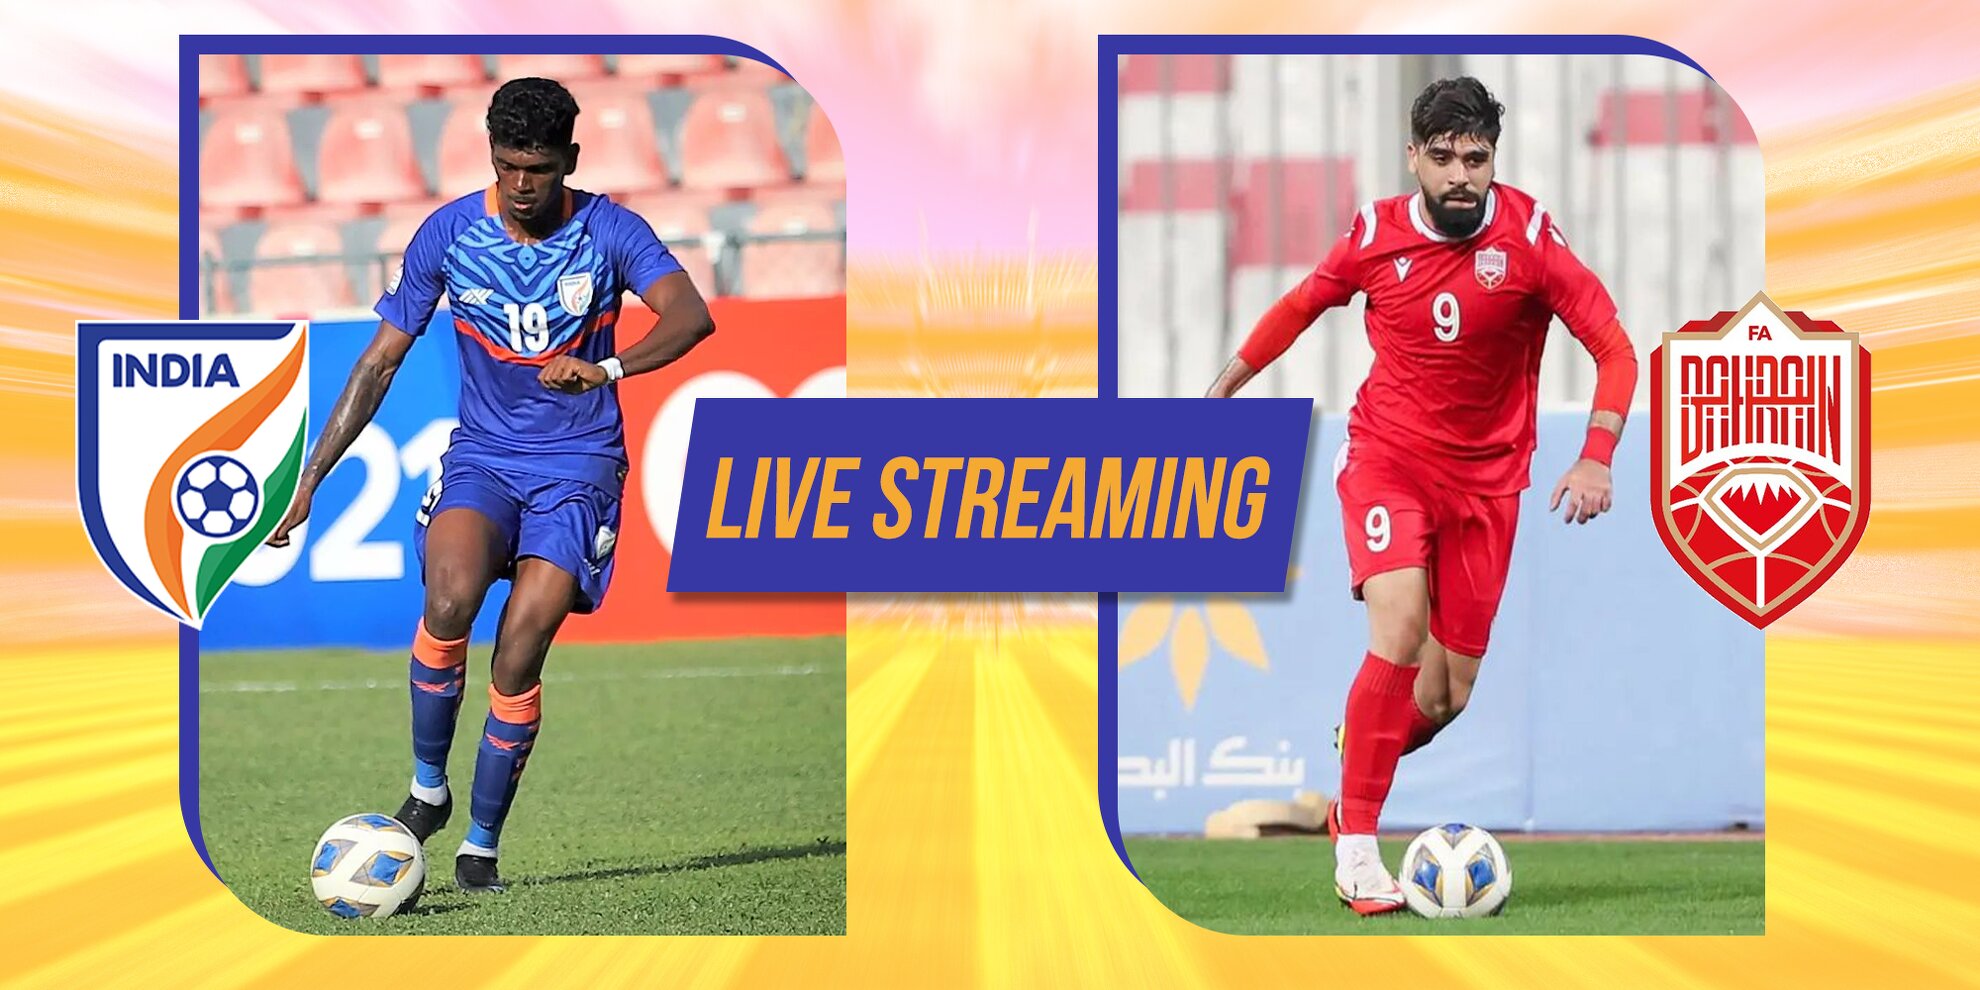 India vs Bahrain Live Streaming